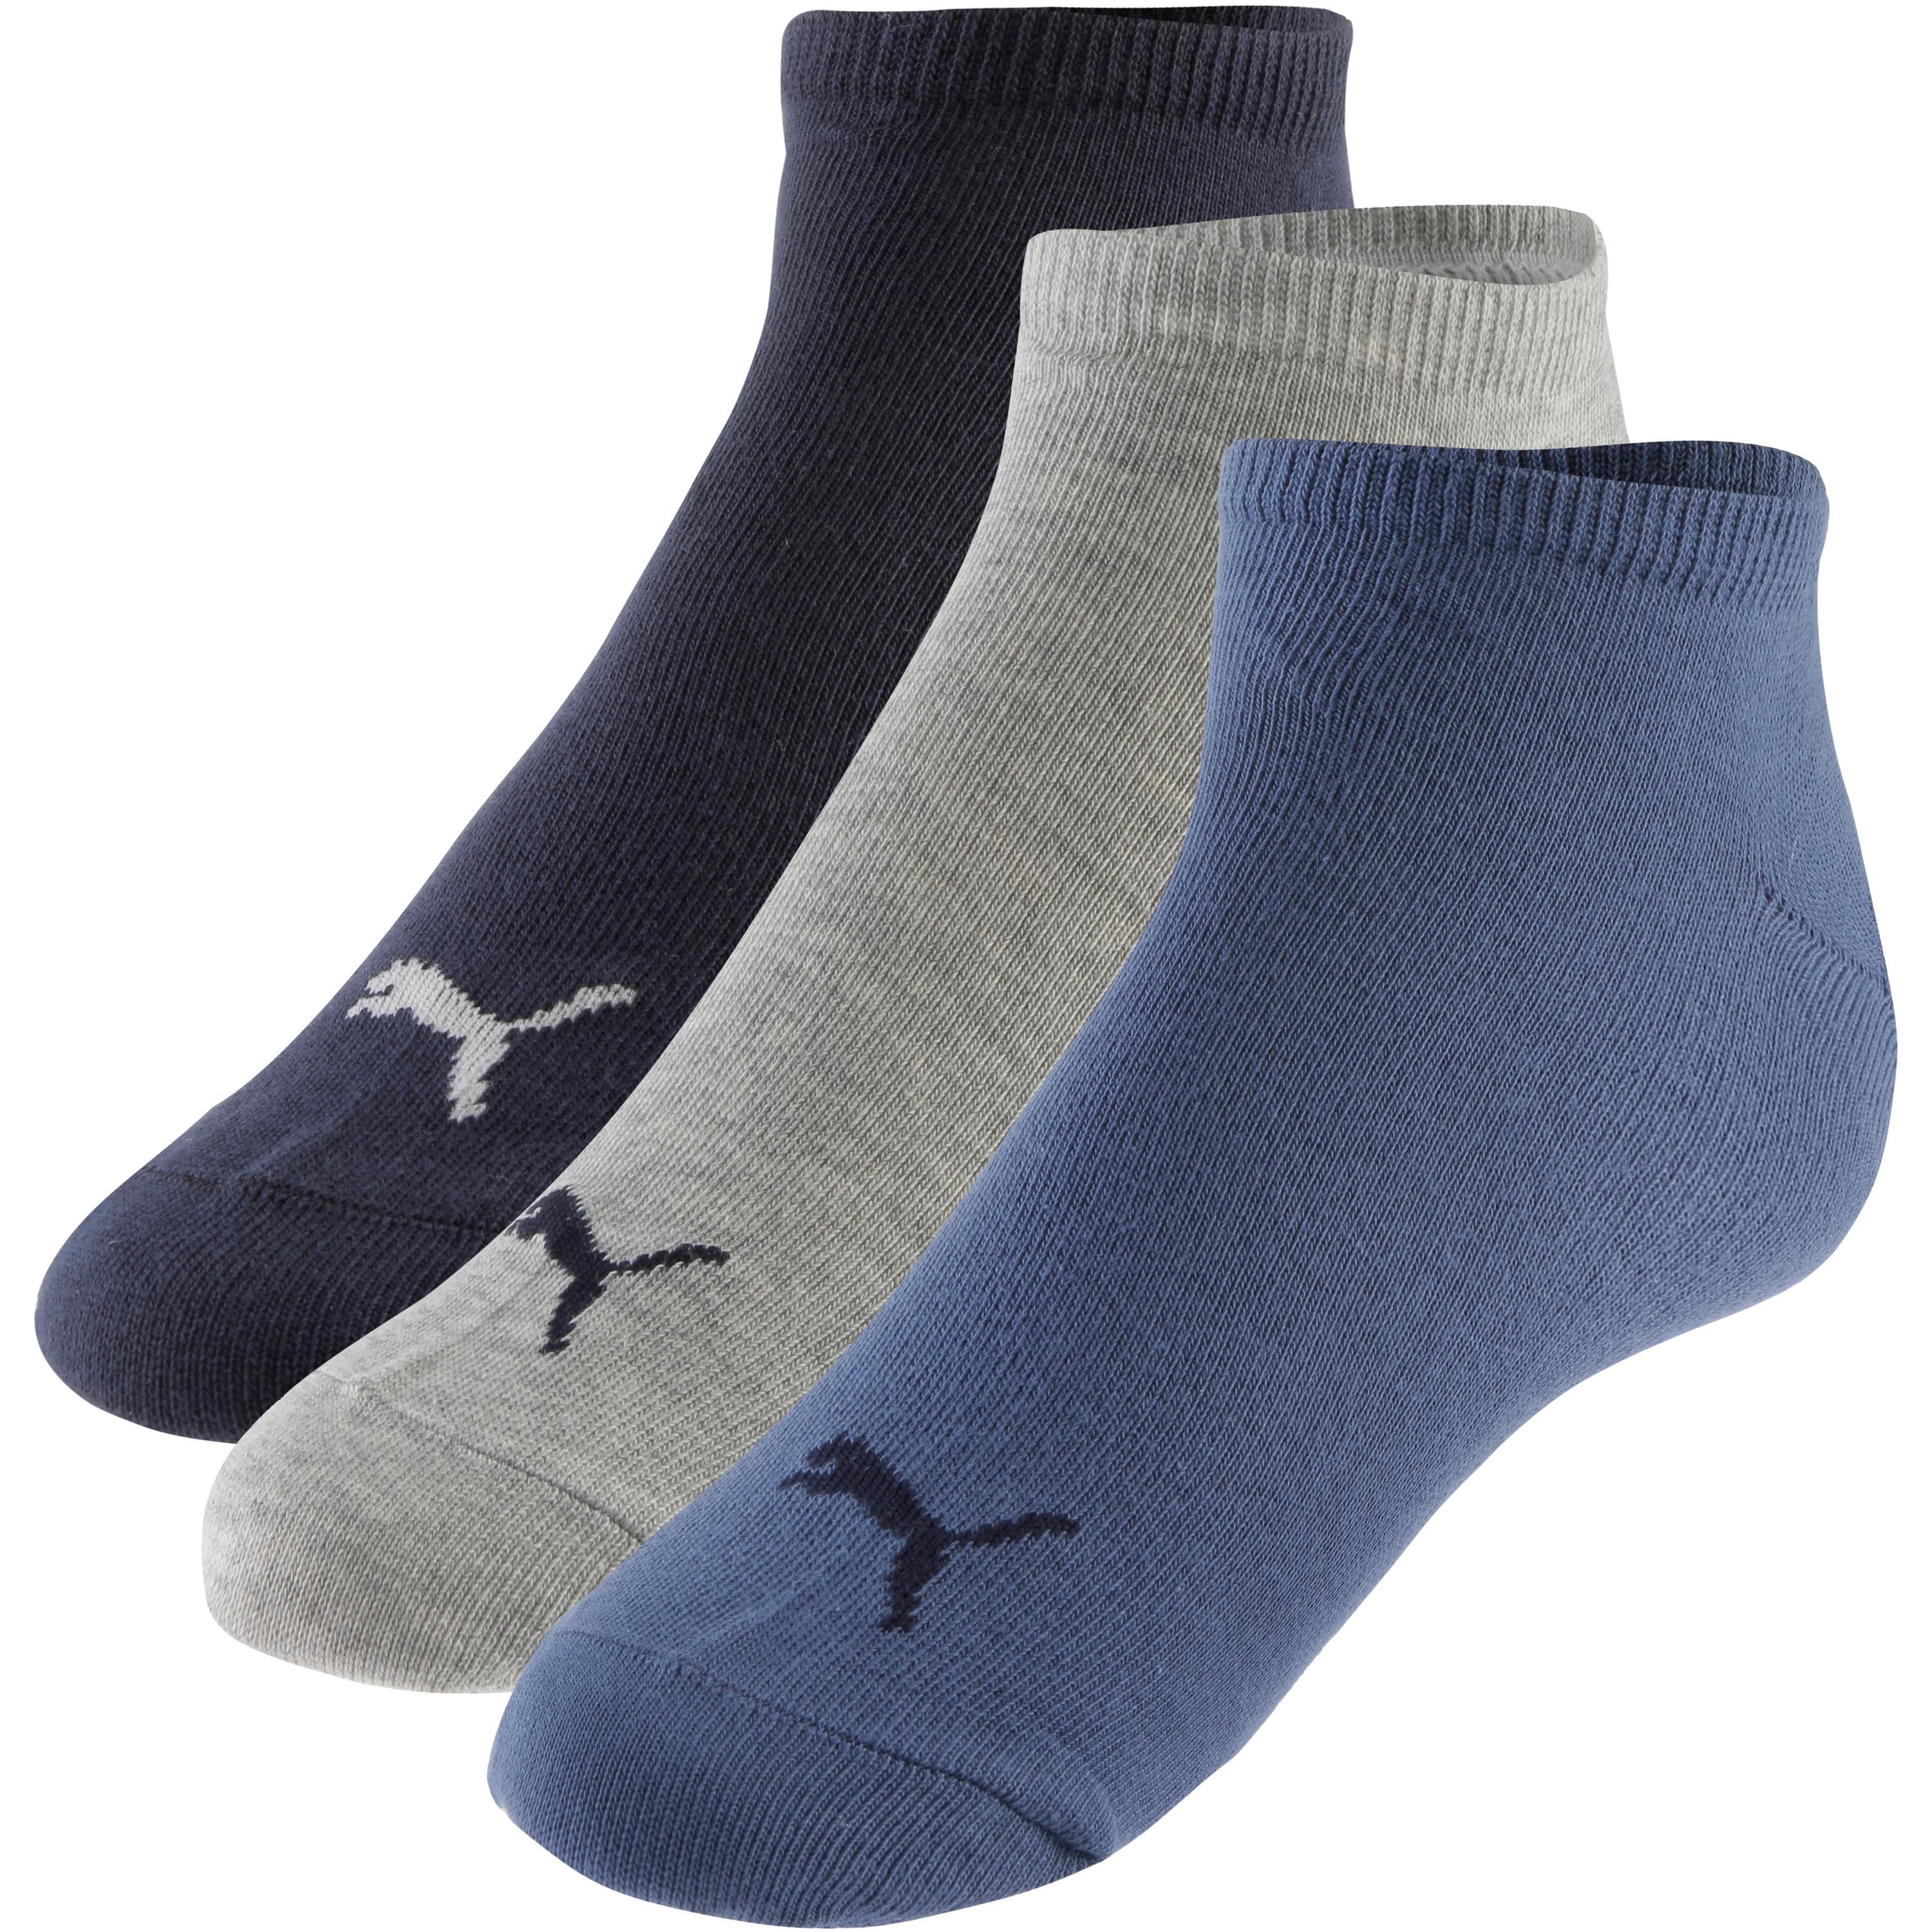 PUMA Socken in Anthrazit, Grau, Taubenblau 